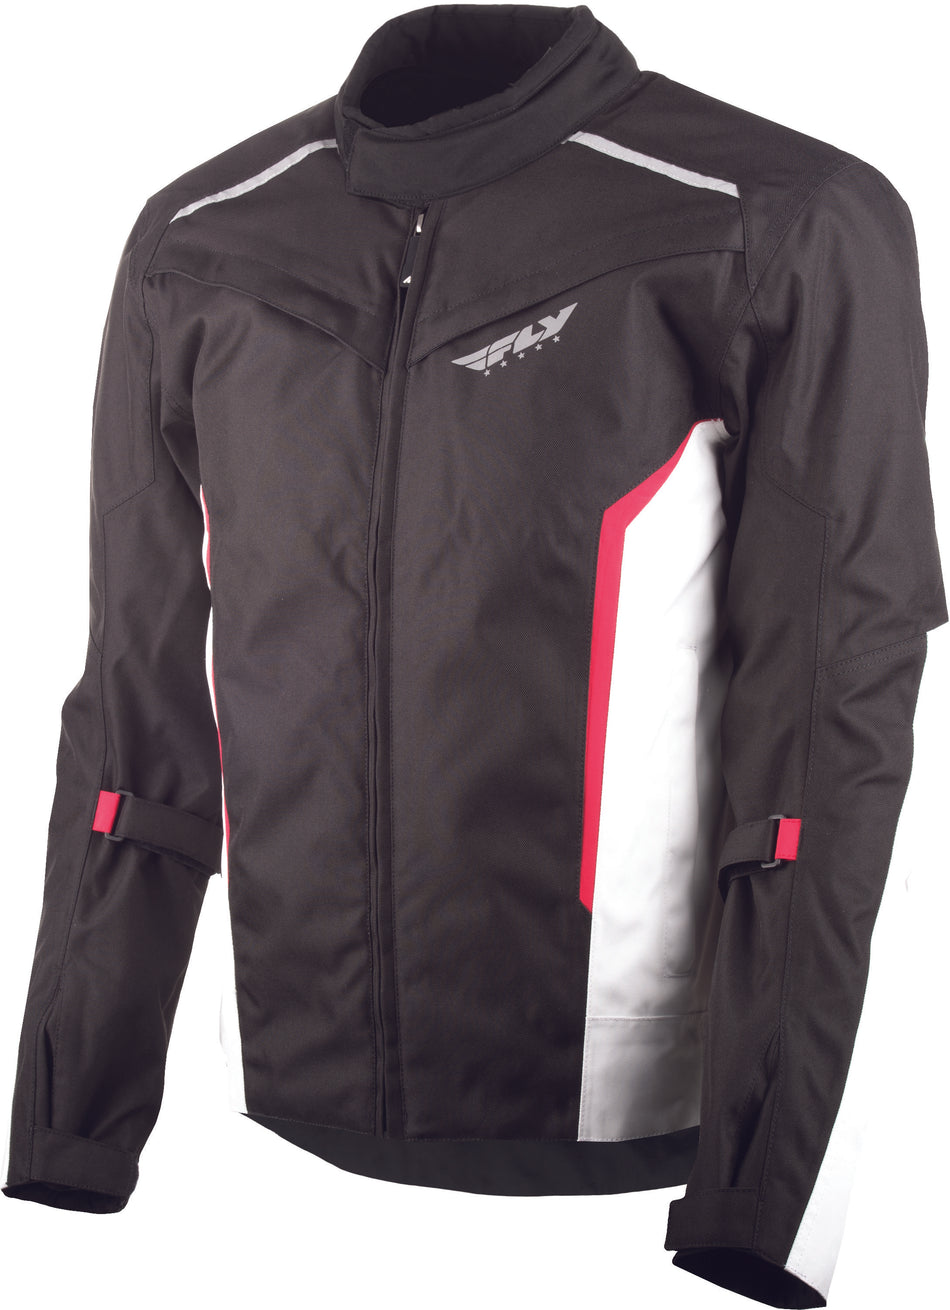 FLY RACING Baseline Jacket Black/White/Red Lg #5958 477-2091~4